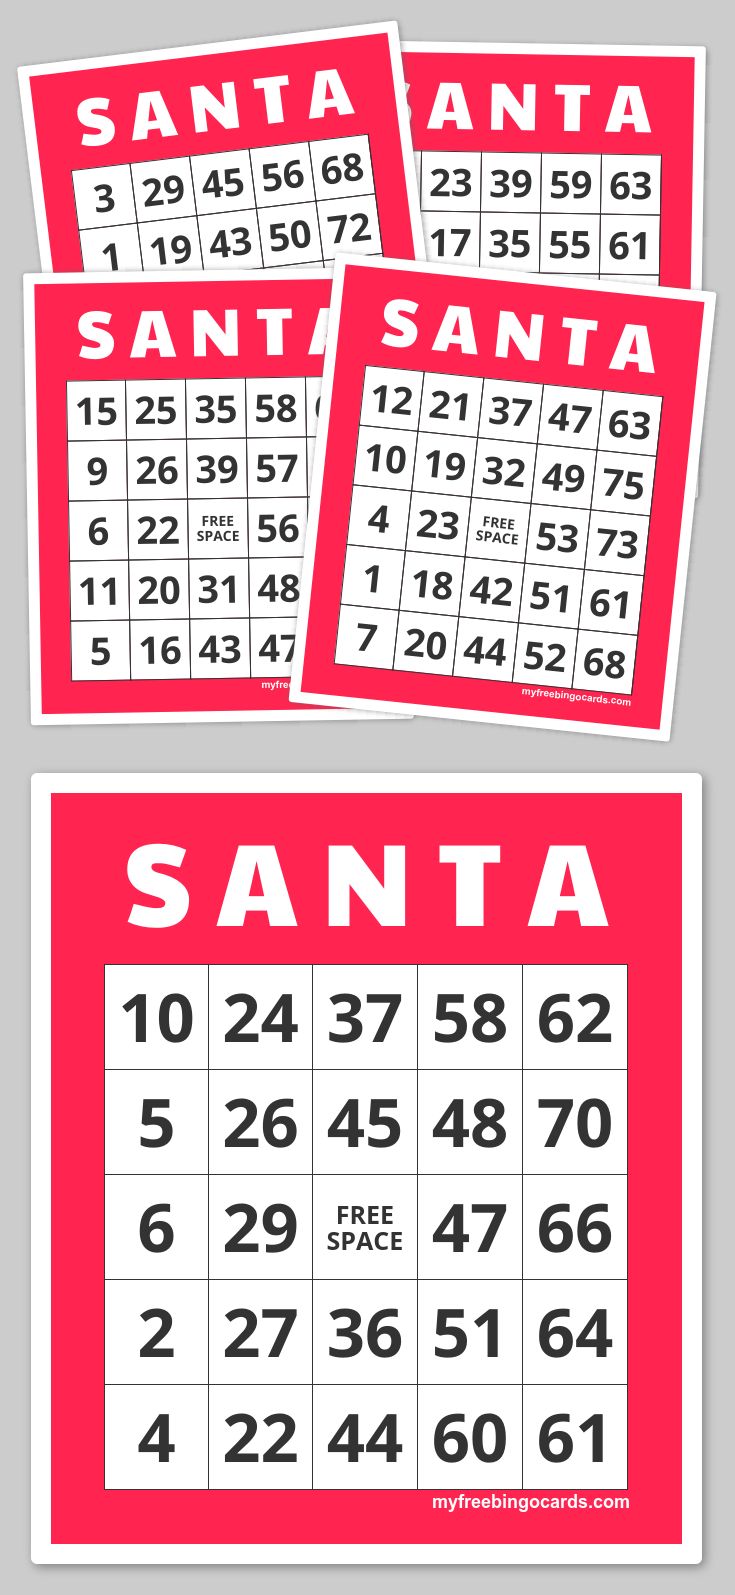 S A N T A BINGO Free Printable Bingo Cards Bingo Cards 